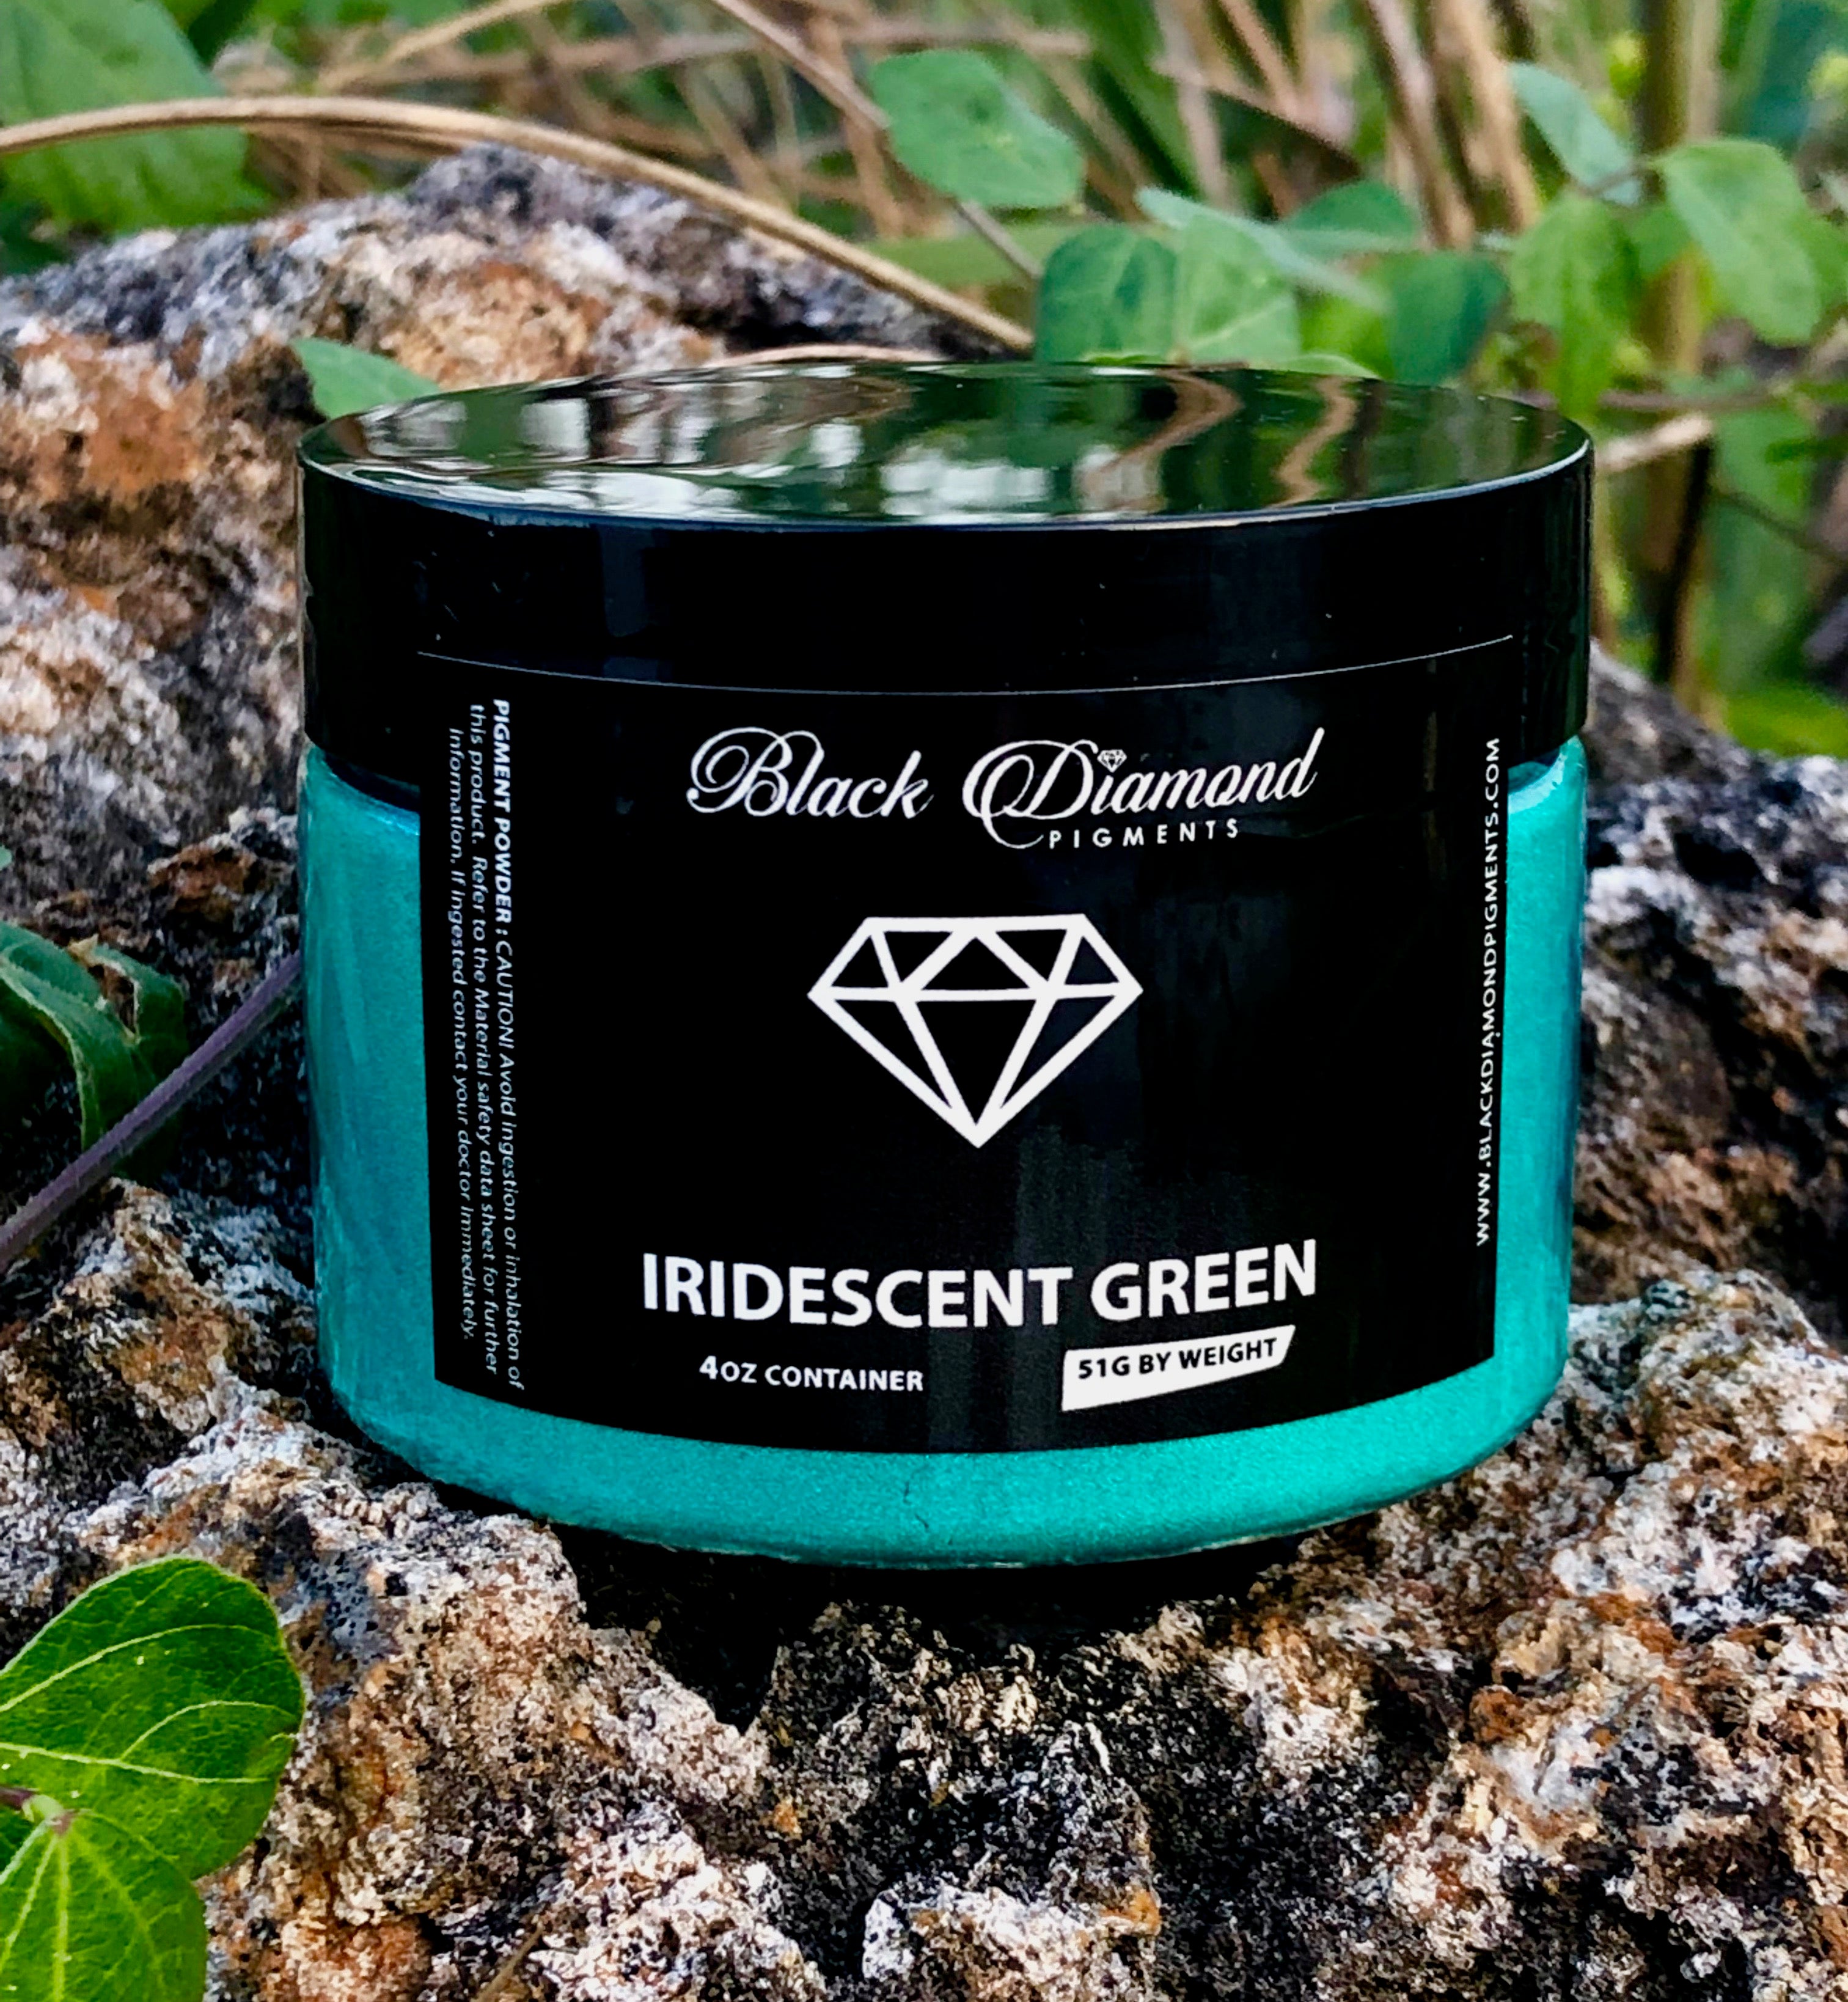 "IRIDESCENT GREEN" Black Diamond Pigments